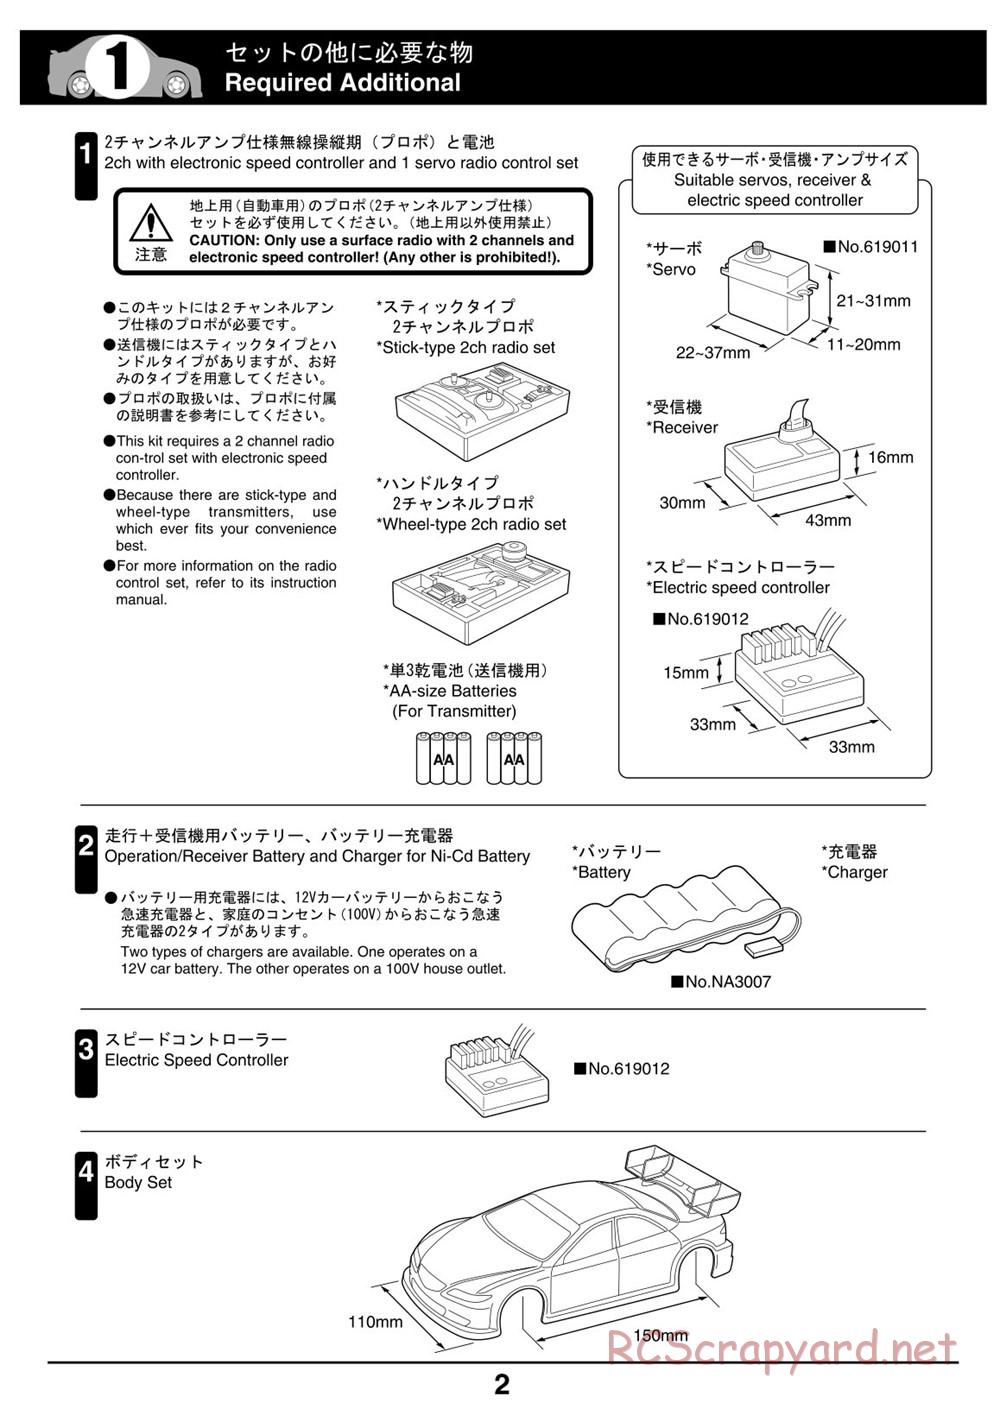 Kyosho - NRX-18 - Manual - Page 2